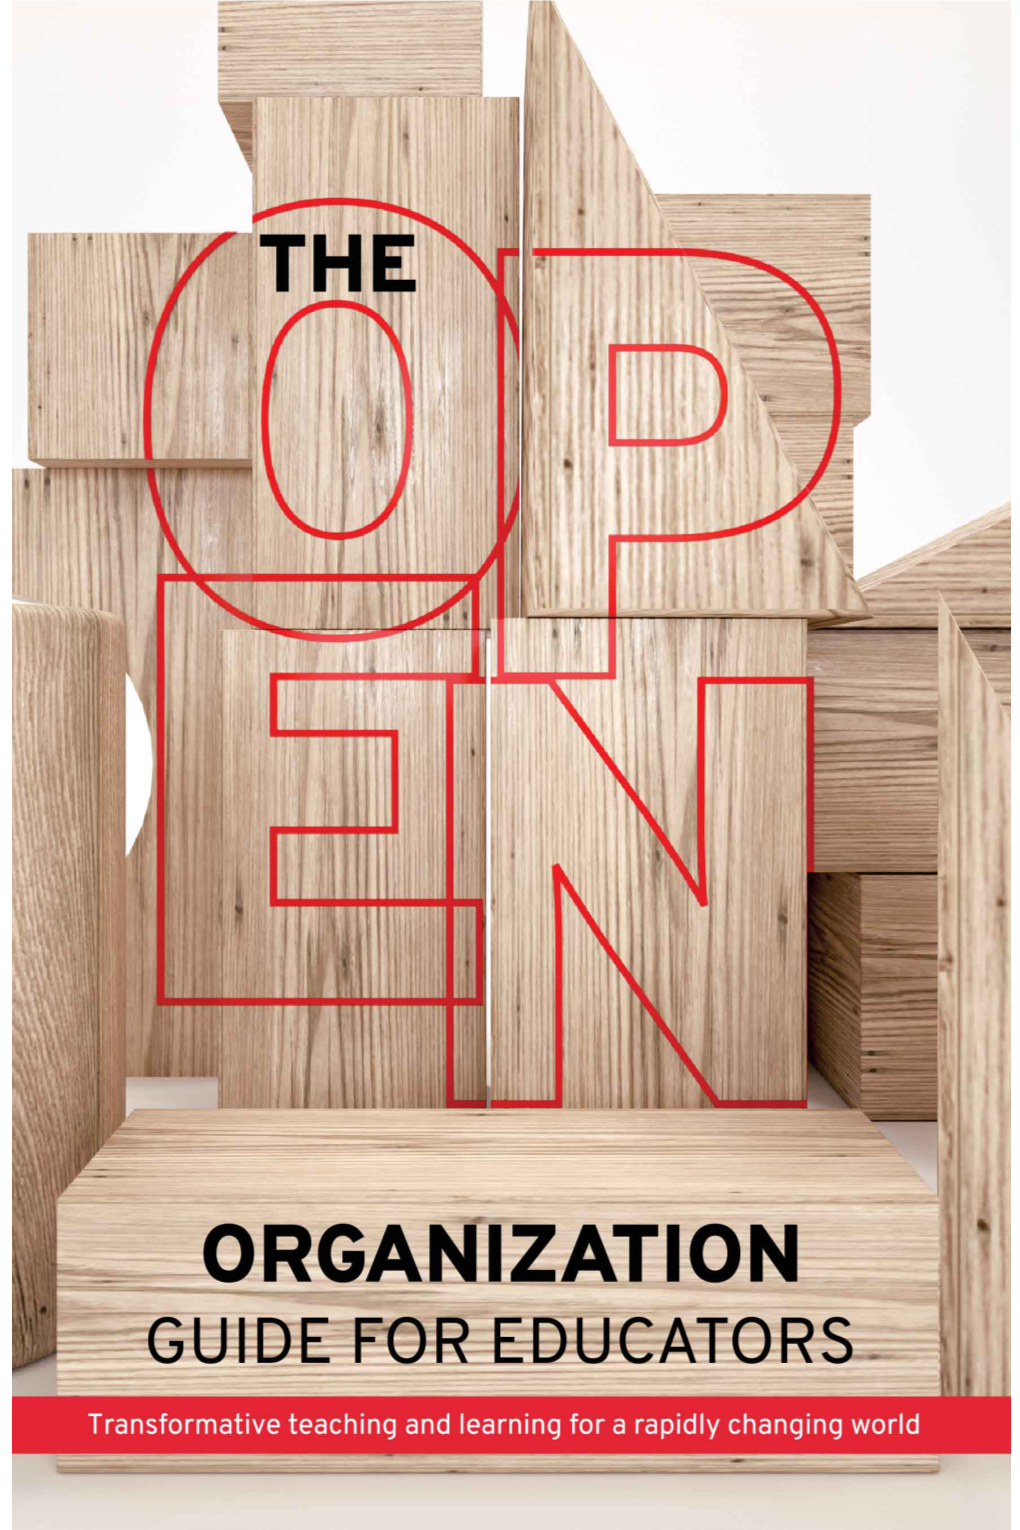 The Open Organization Guide for Educators